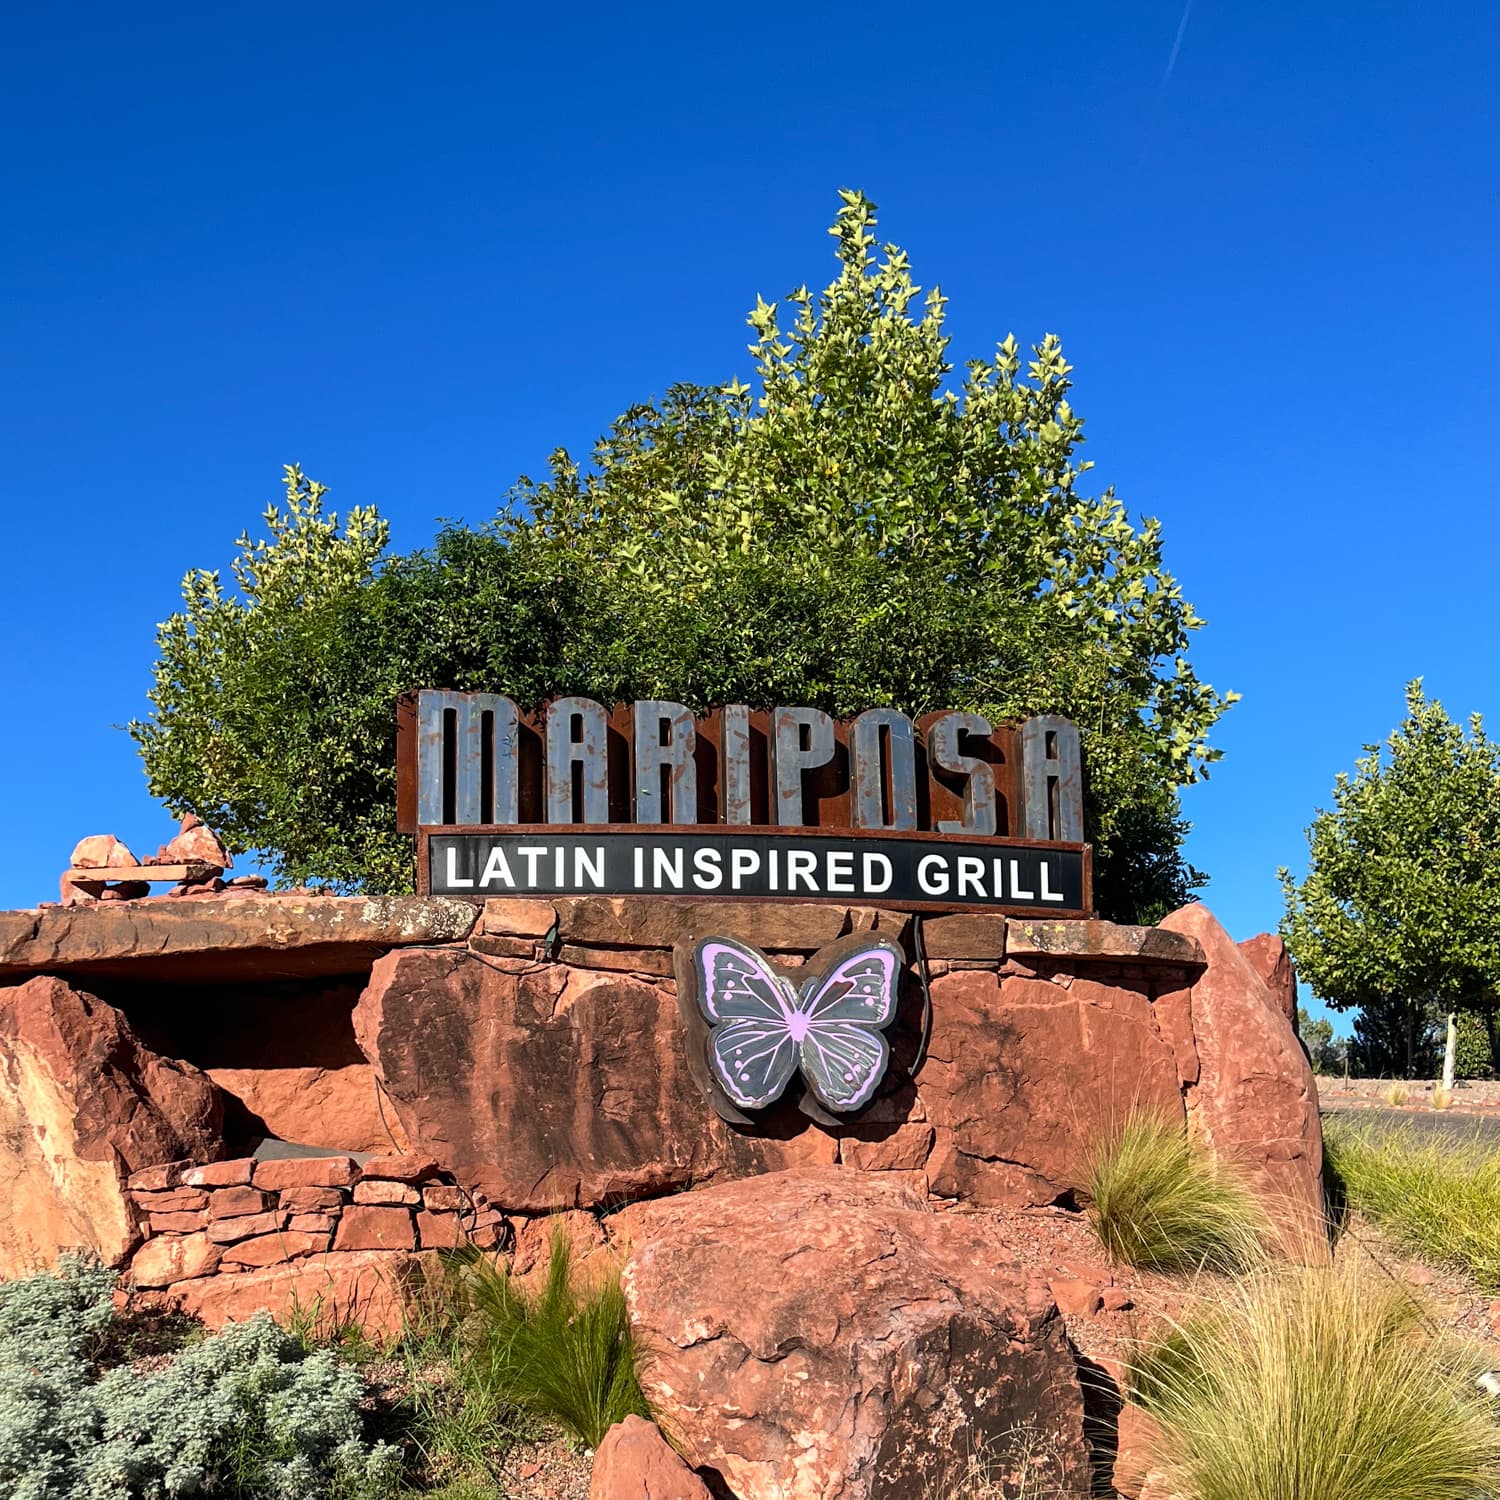 Sign for Mariposa Latin Inspired Grill in Sedona, Arizona